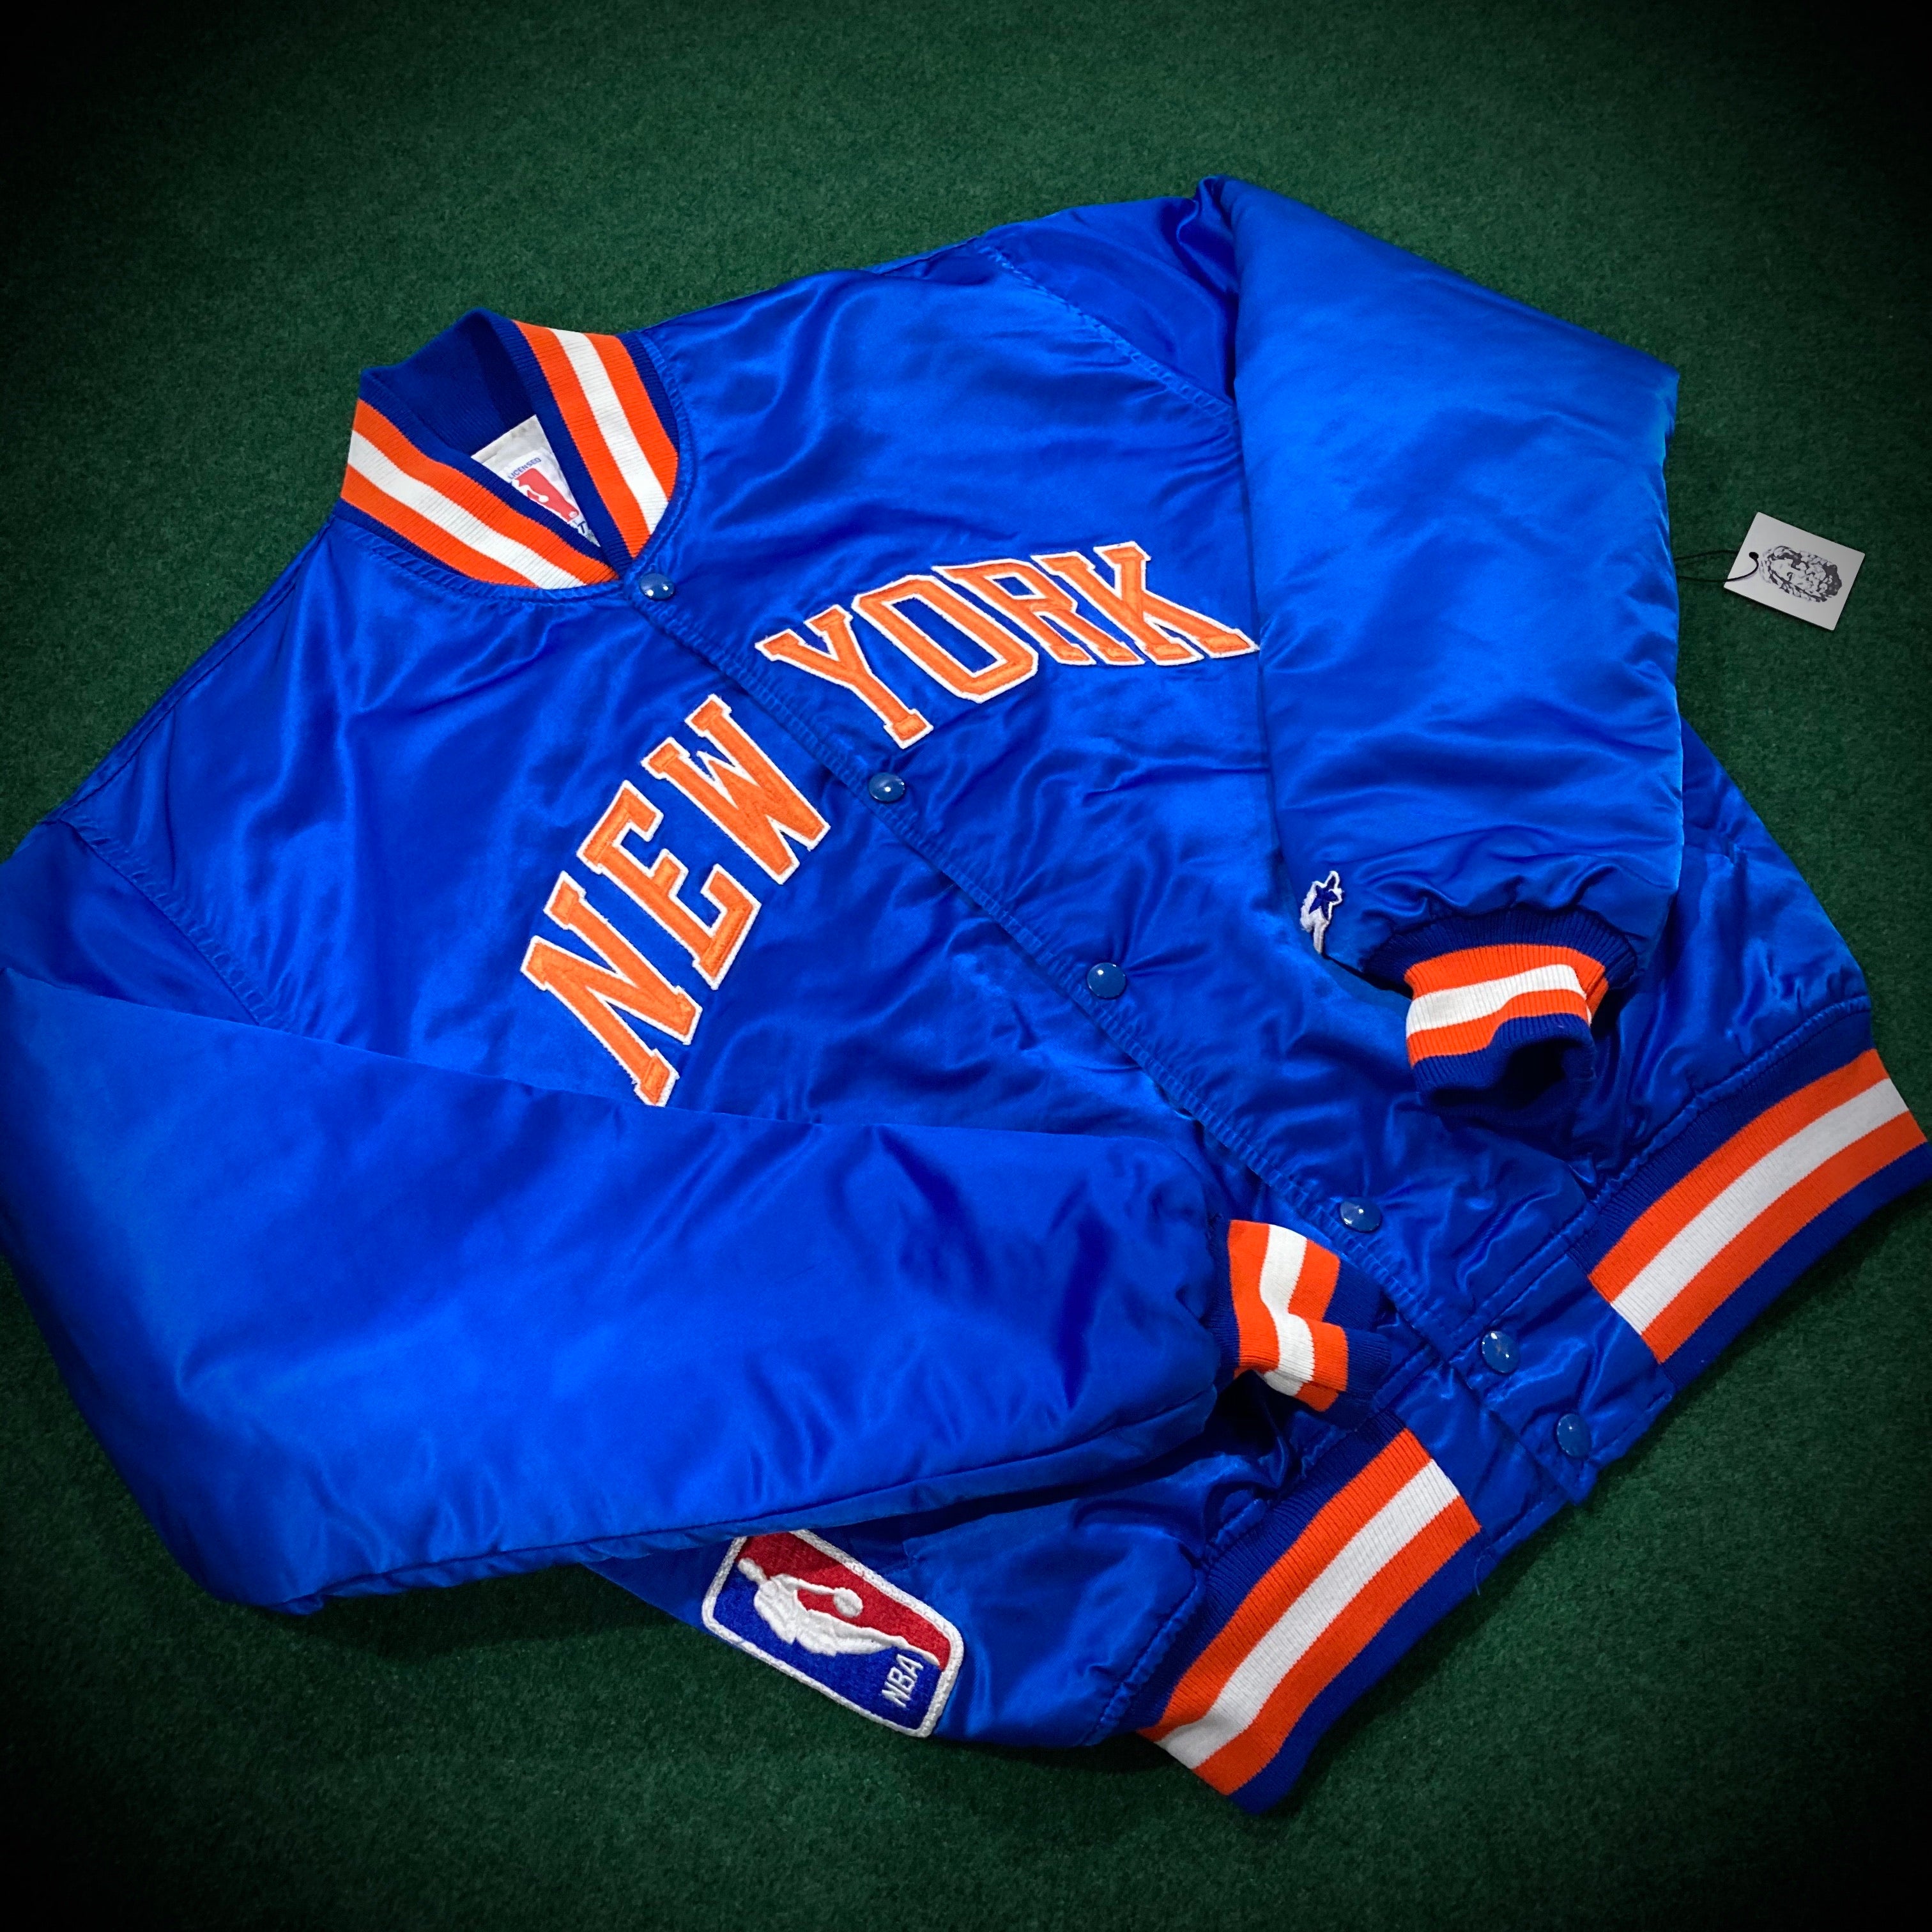 Vintage New York Knicks Starter Windbreaker Jacket 